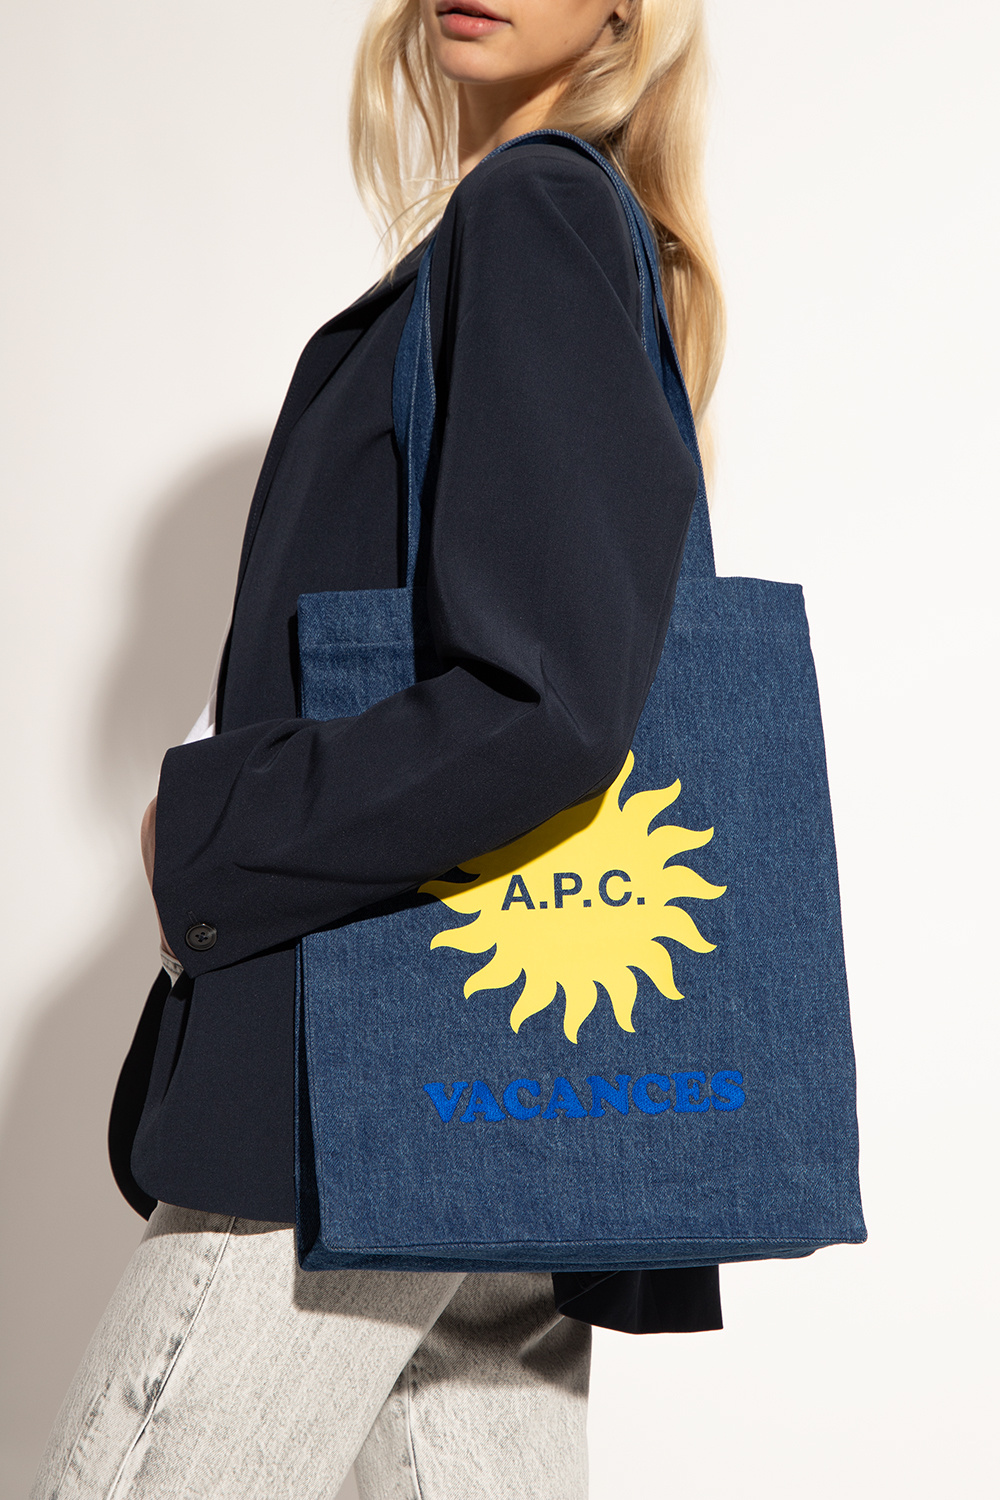 A.P.C. ‘Lou’ denim shopper bag